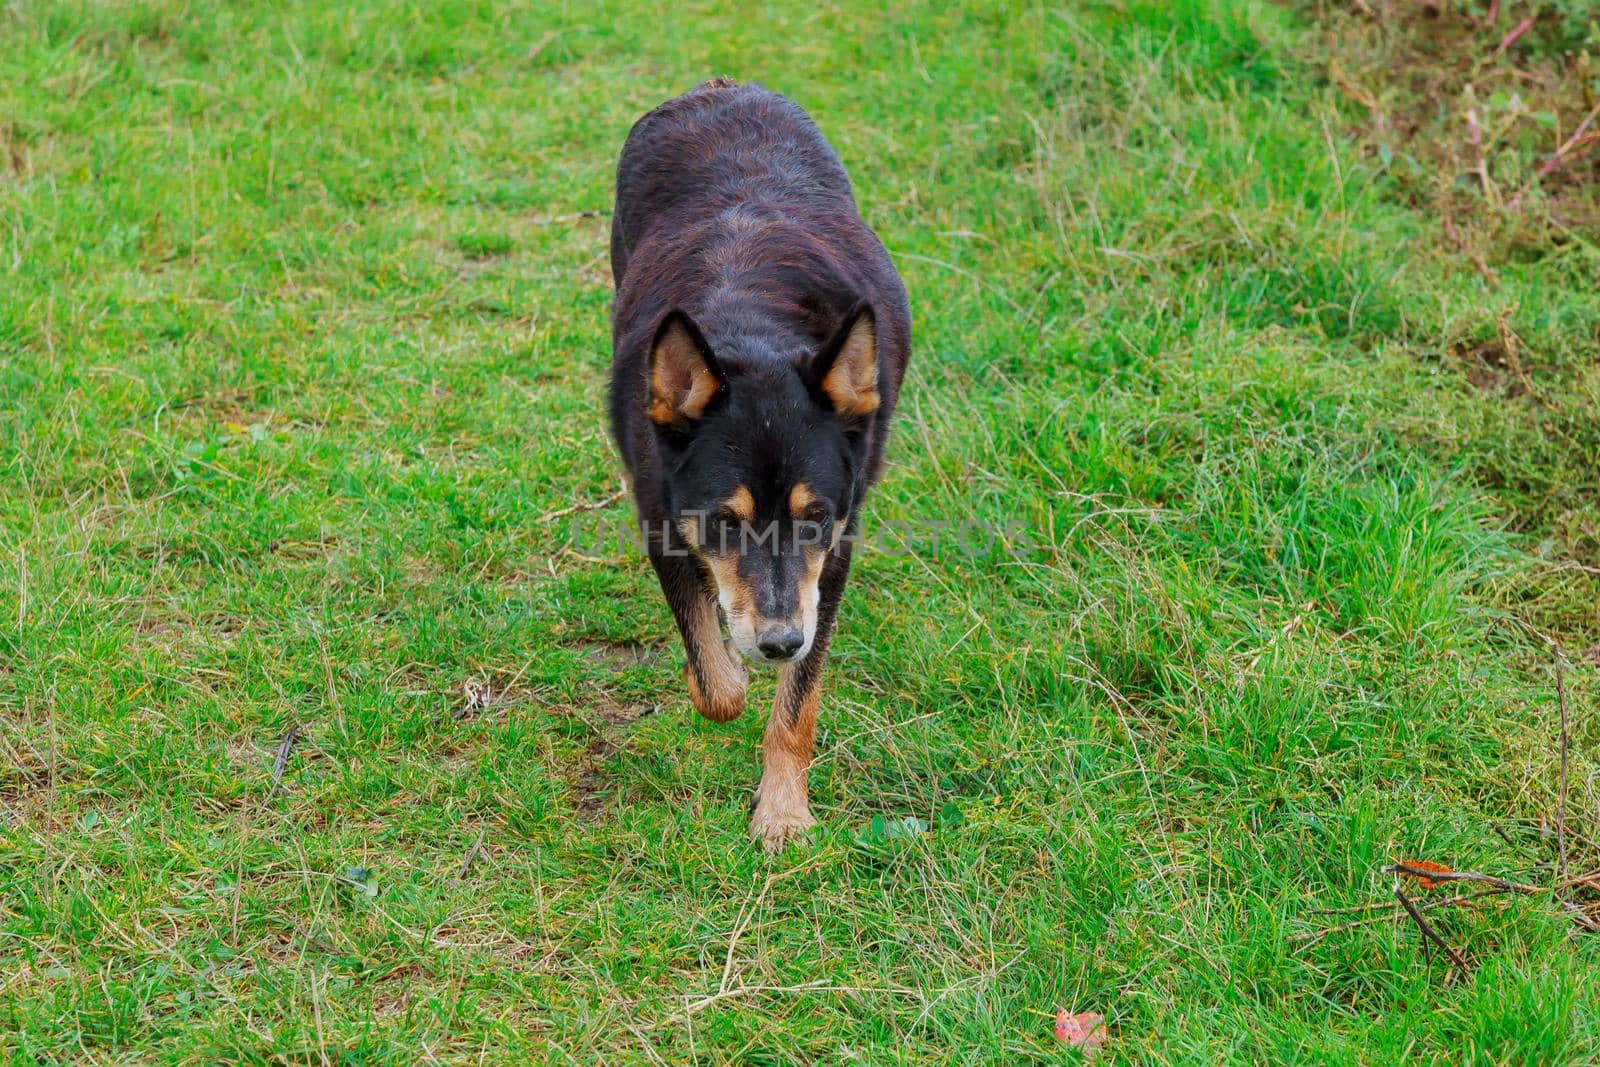 A beautiful dog running in the green grass